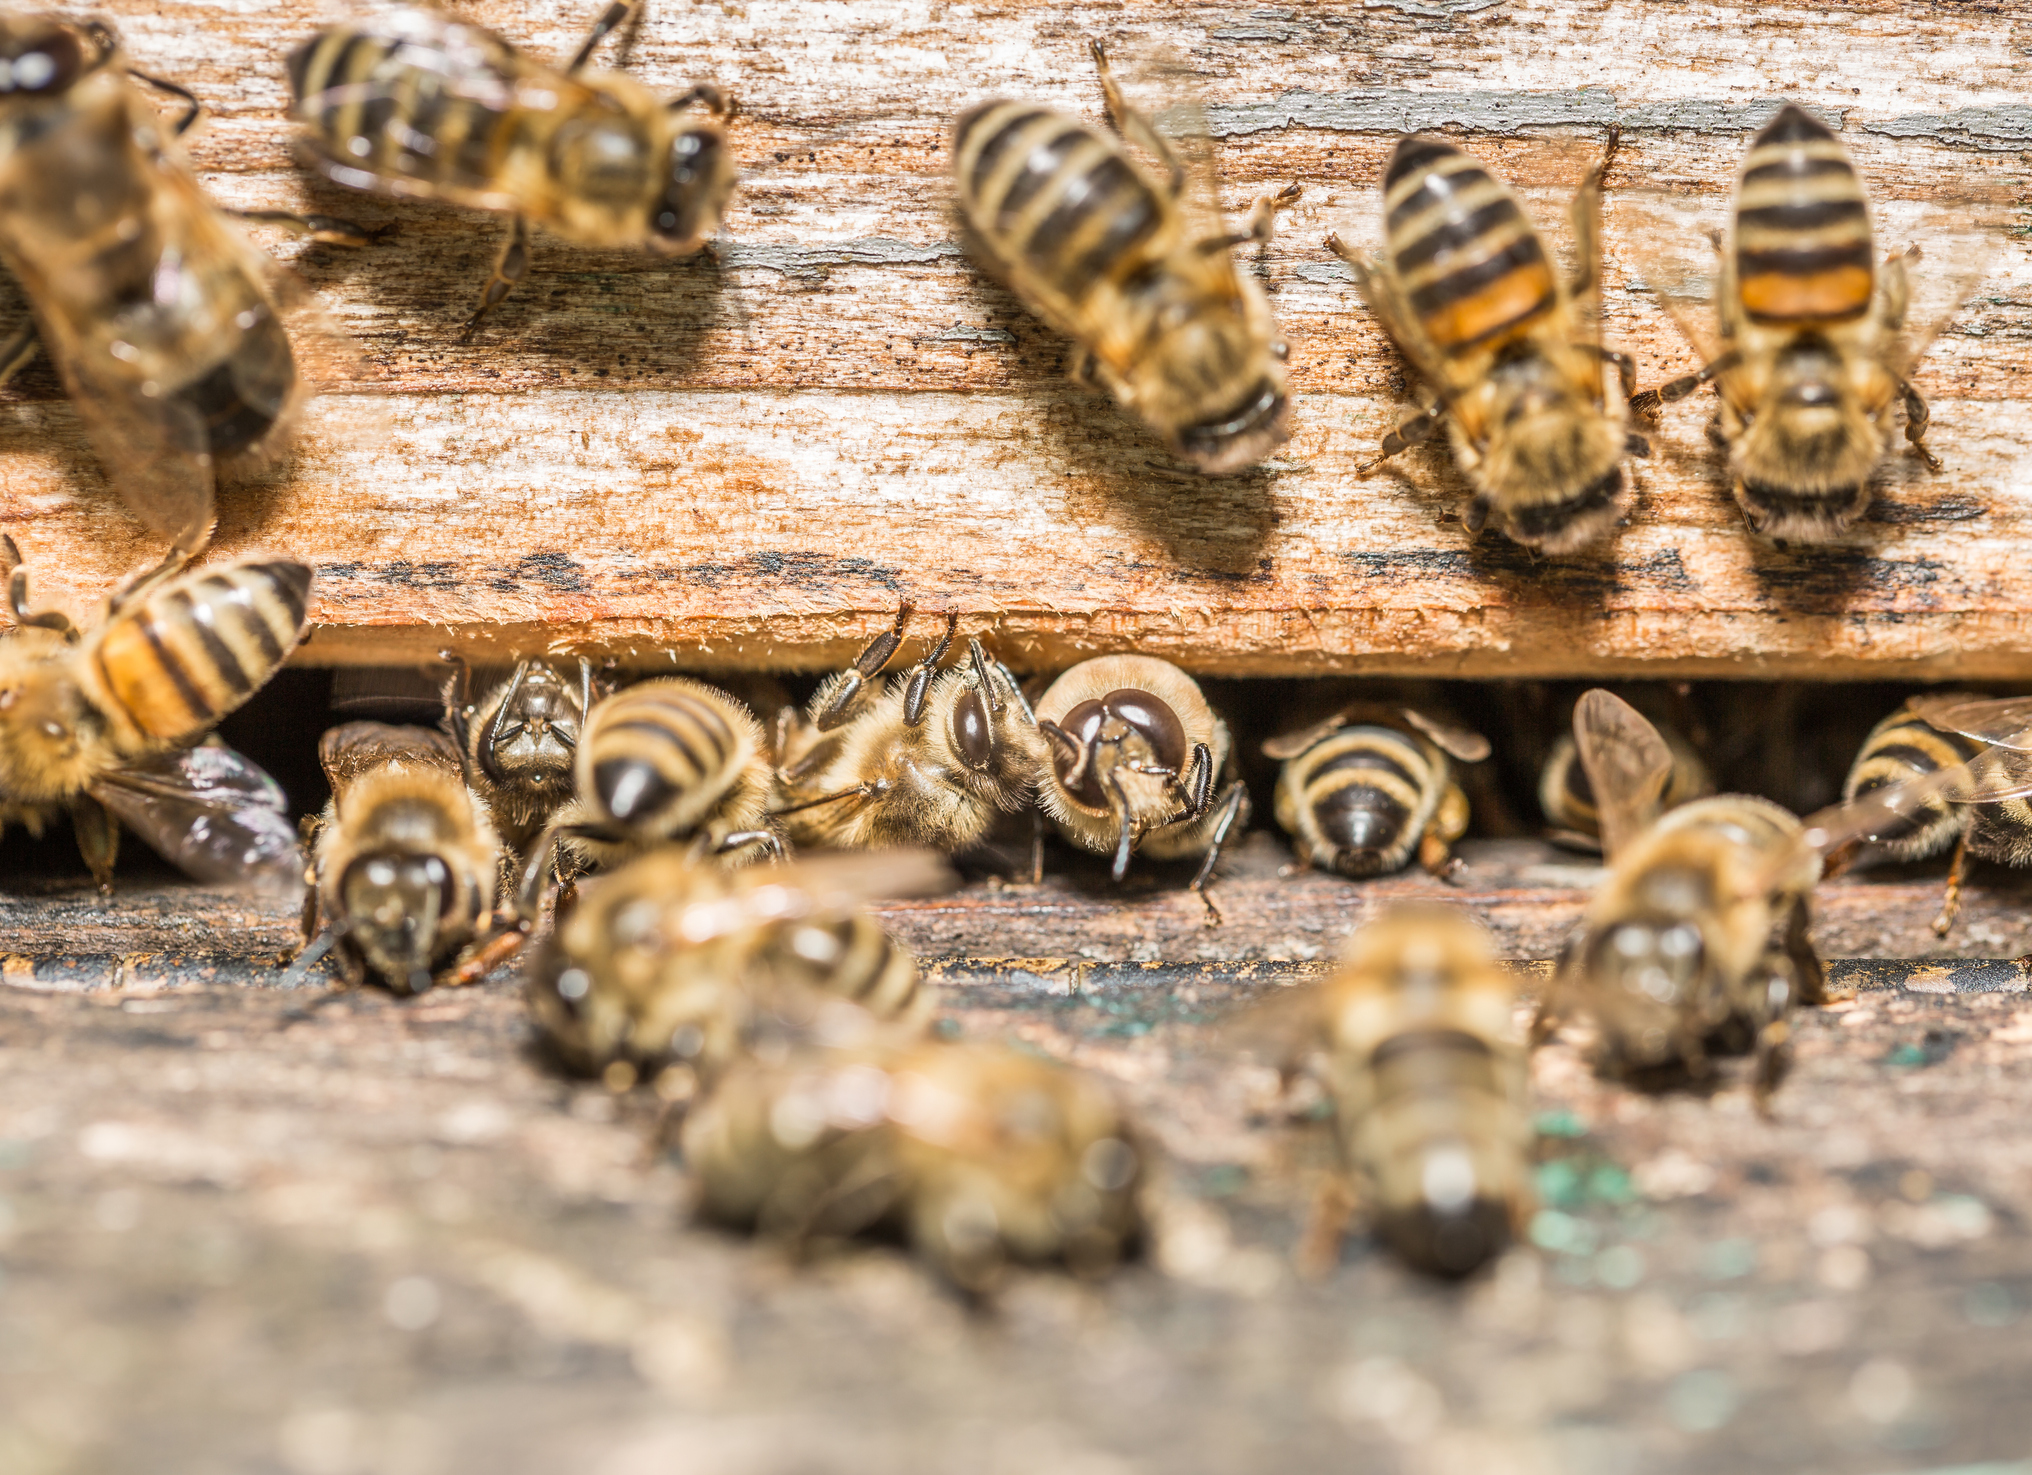 Over a million bees swarm Florida highway after crash.